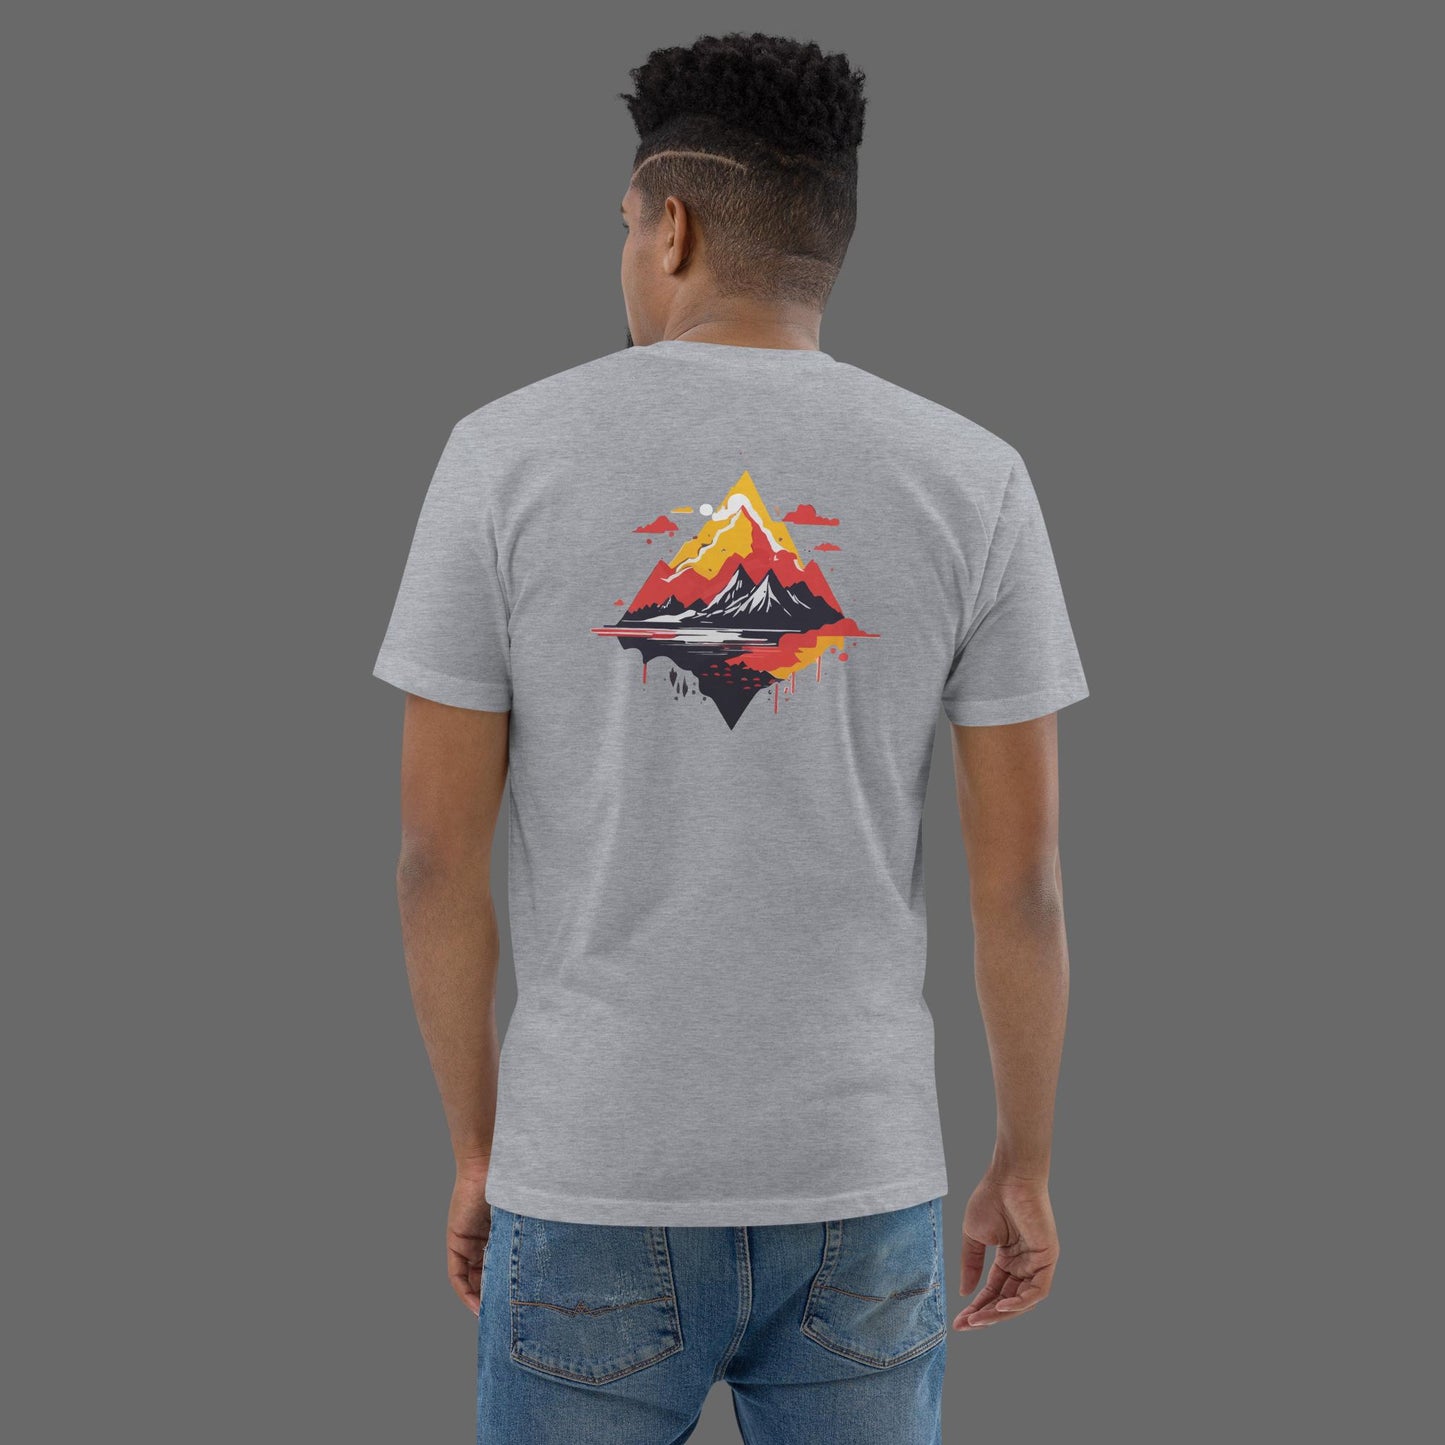 The Peak T-Shirt